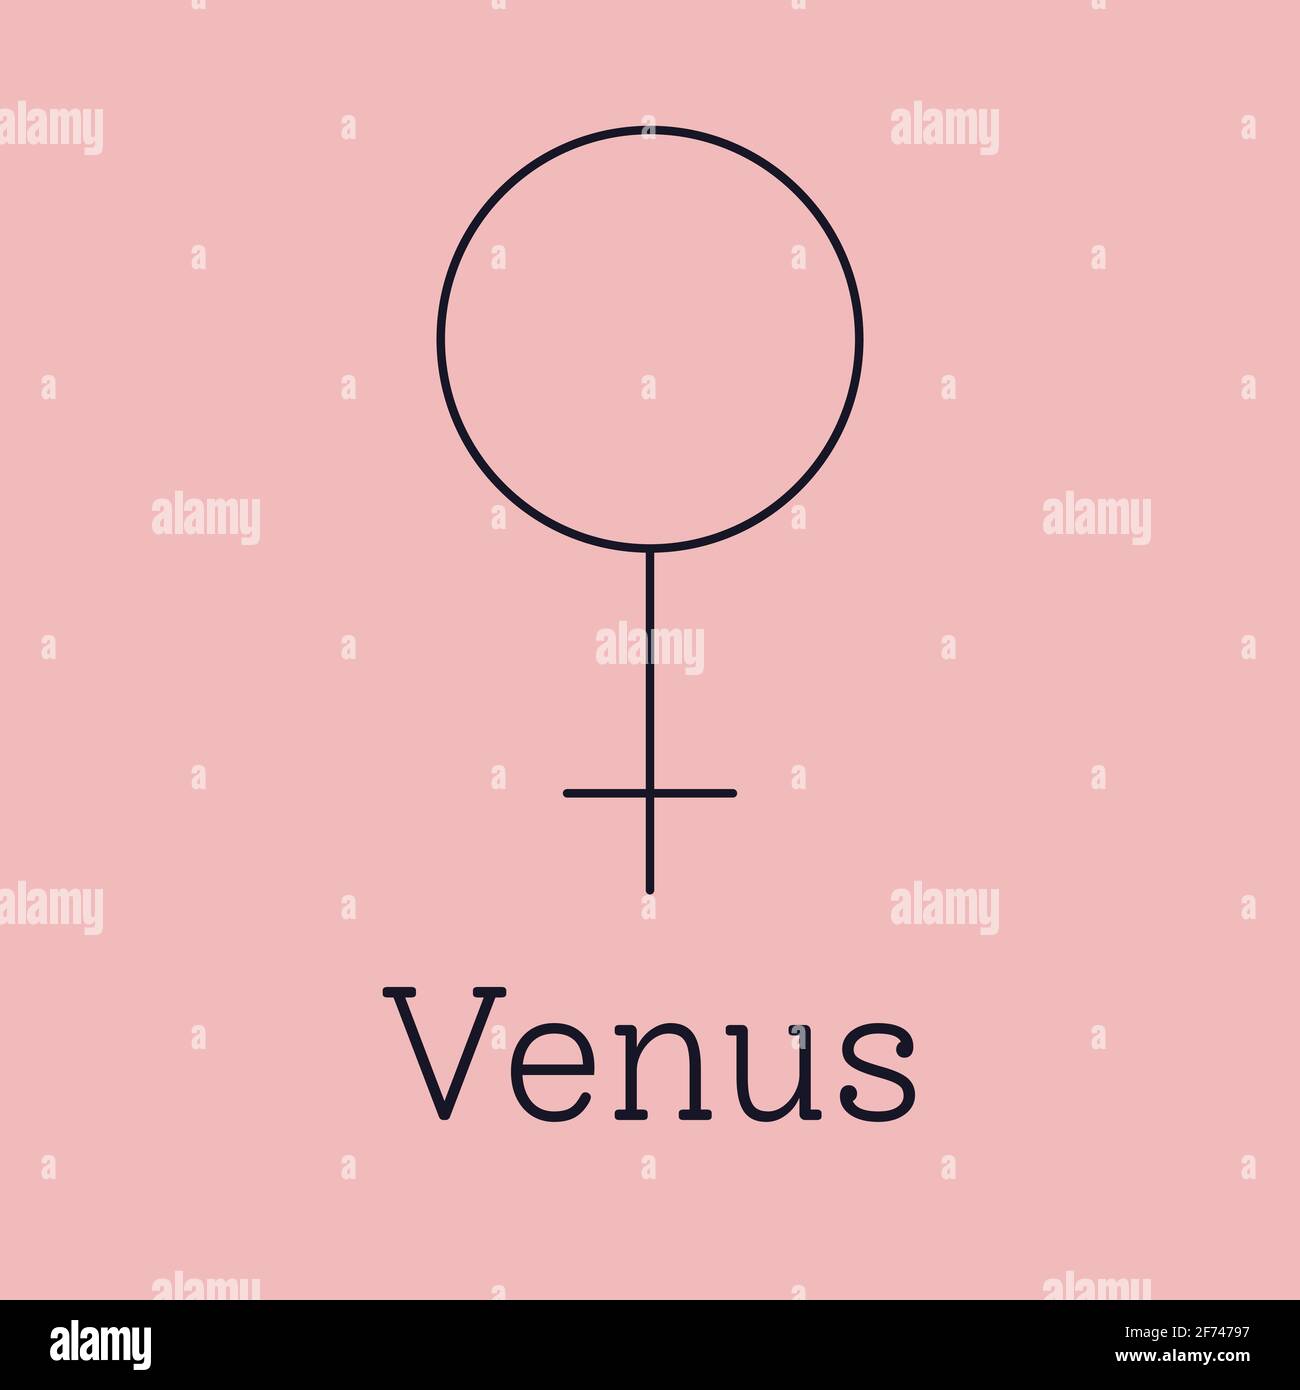 Planet venus Stock Vector Images - Alamy